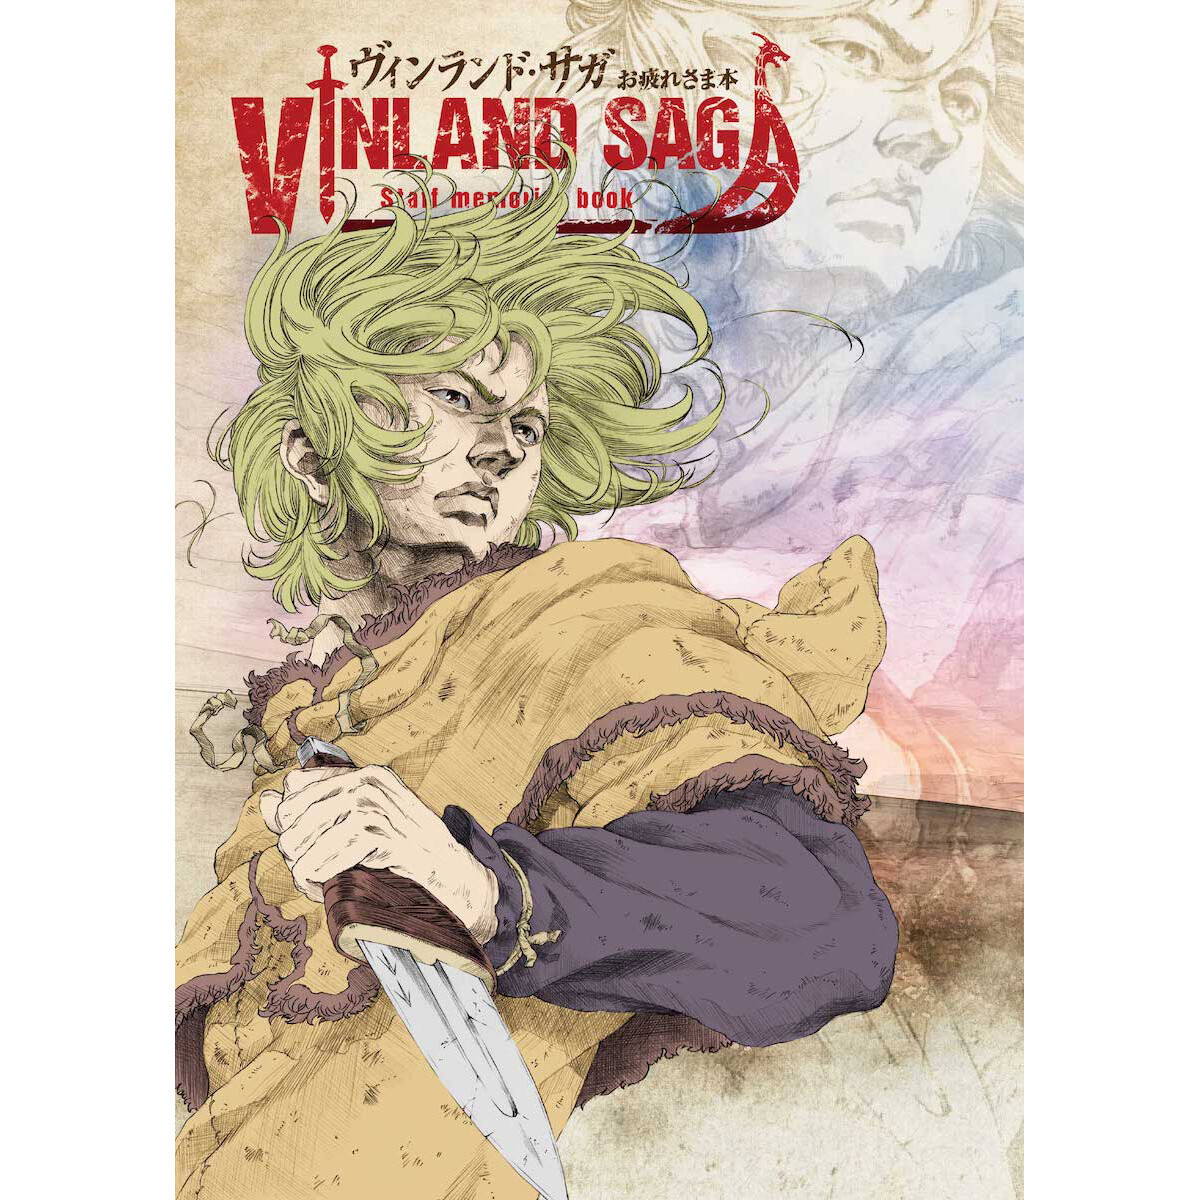 Vinland Saga Merch - Official Vinland Saga Merchandise Store